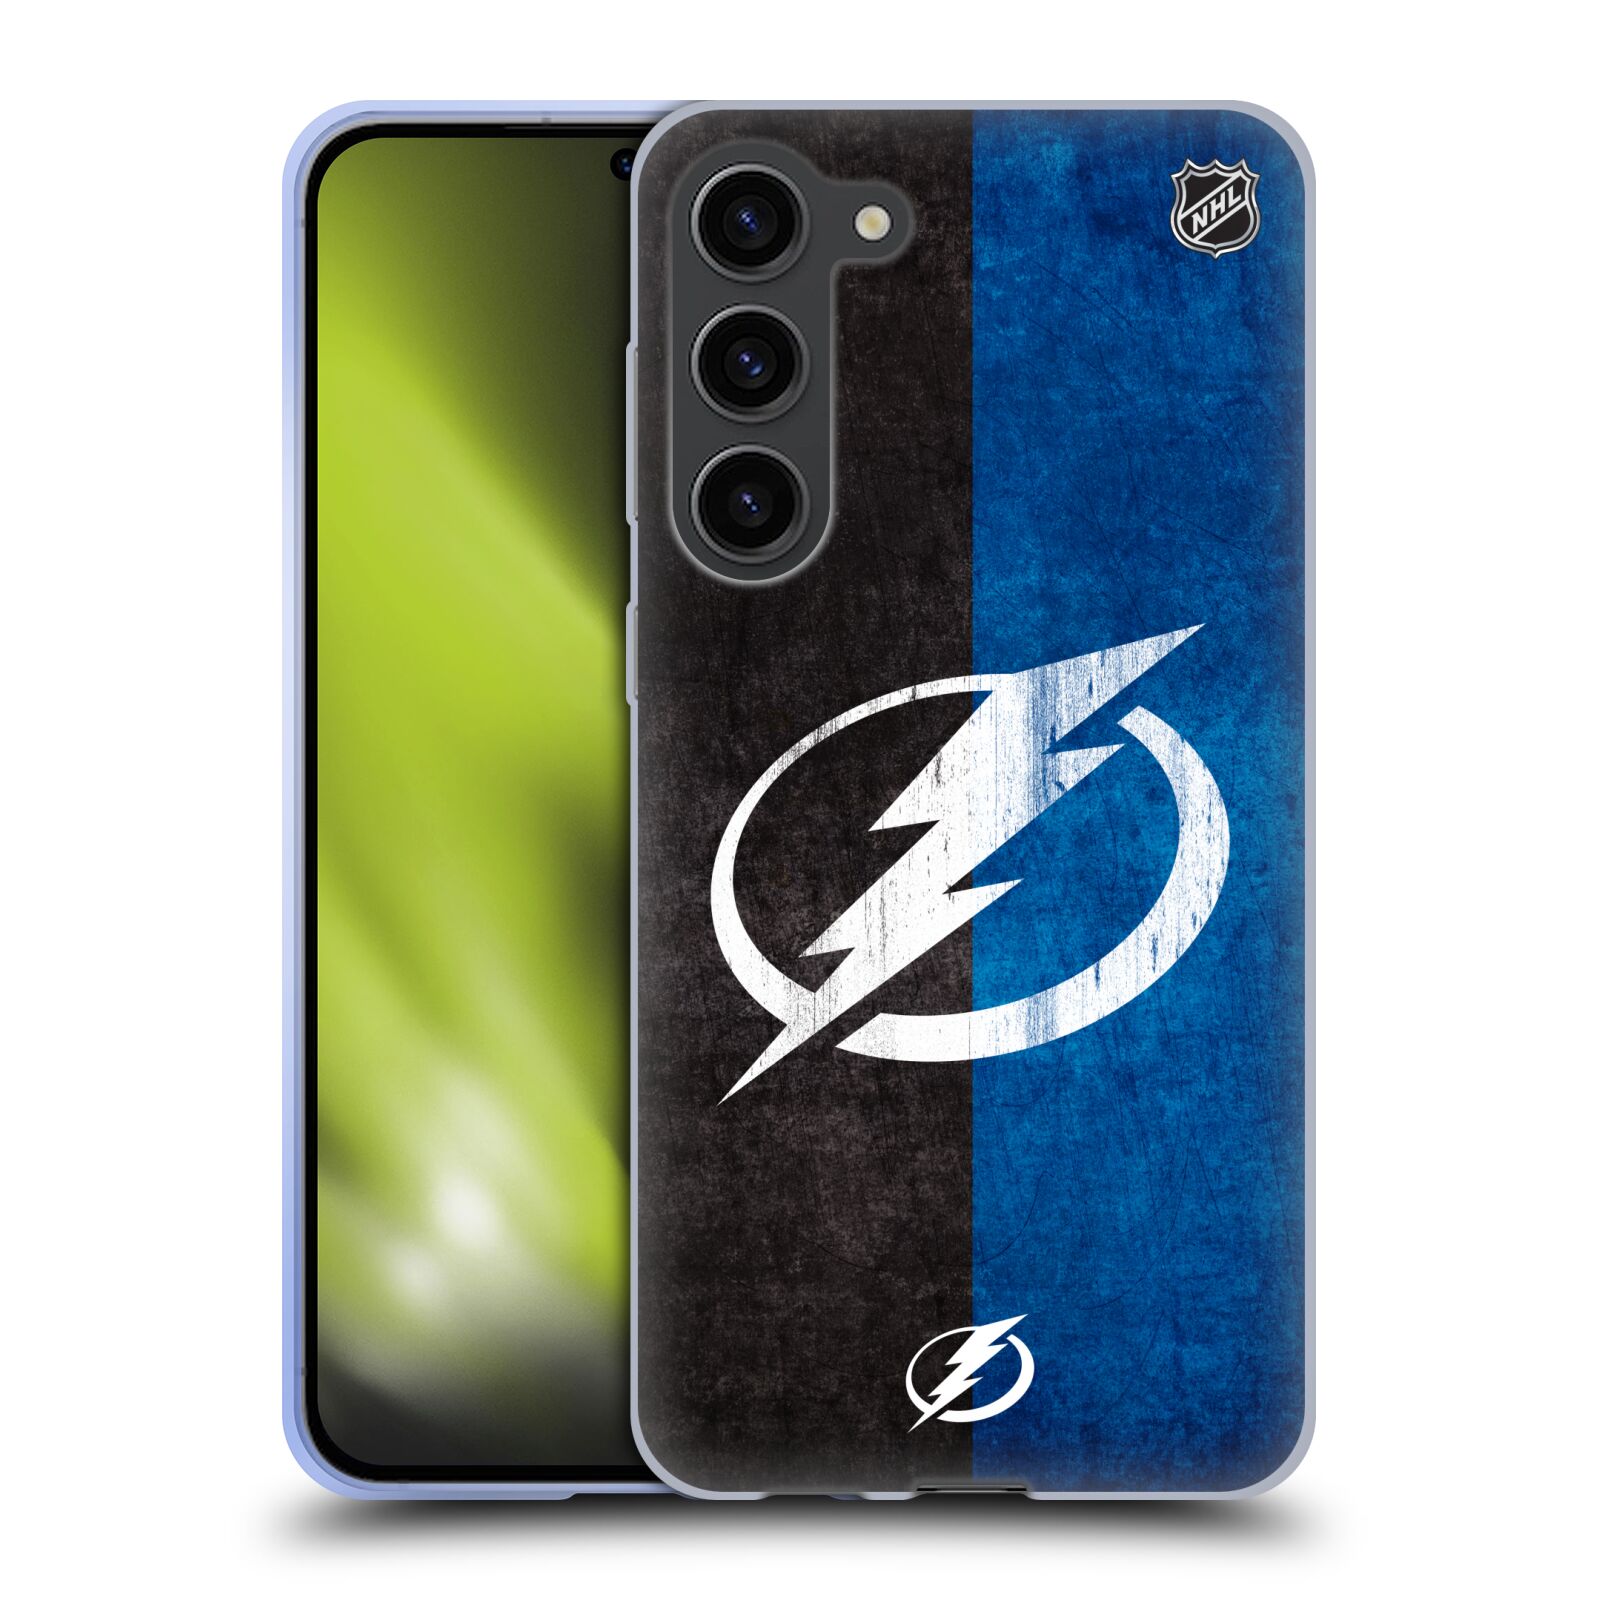 Silikonové pouzdro na mobil Samsung Galaxy S23 Plus - NHL - Půlené logo Tampa Bay Lightning (Silikonový kryt, obal, pouzdro na mobilní telefon Samsung Galaxy S23 Plus s licencovaným motivem NHL - Půlené logo Tampa Bay Lightning)